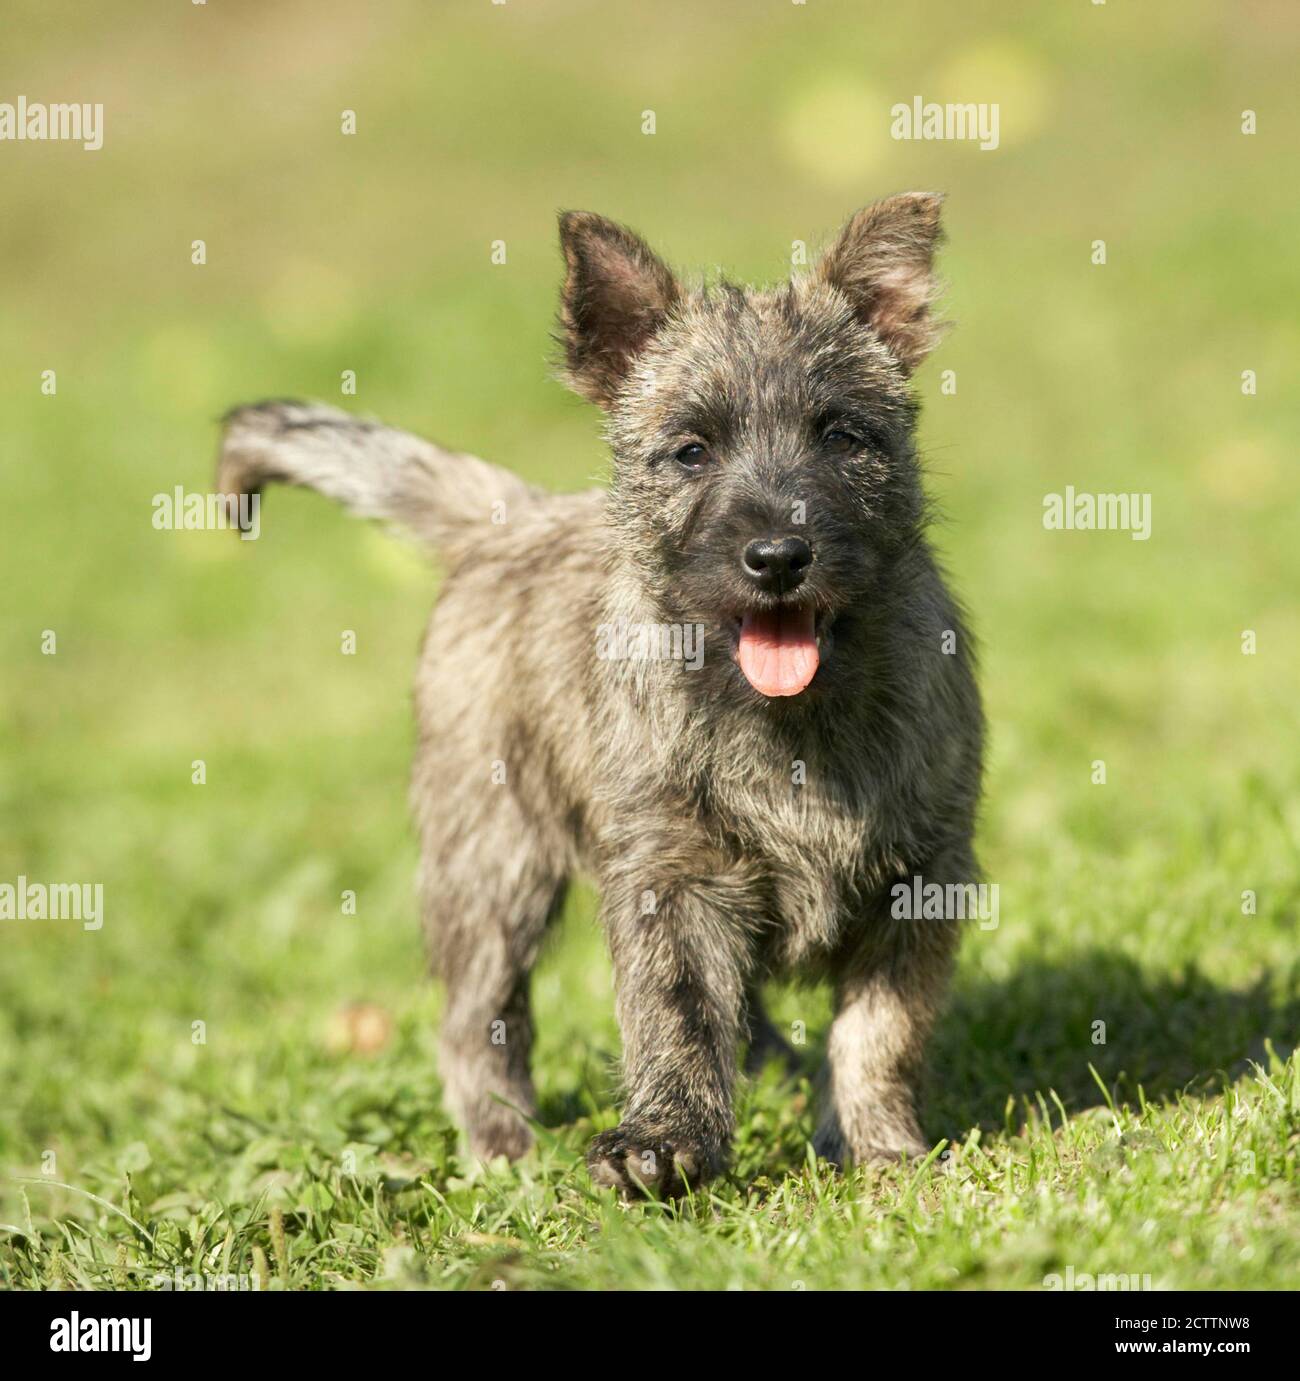 Cairn Terrier. Puppy standing on grass. Stock Photo